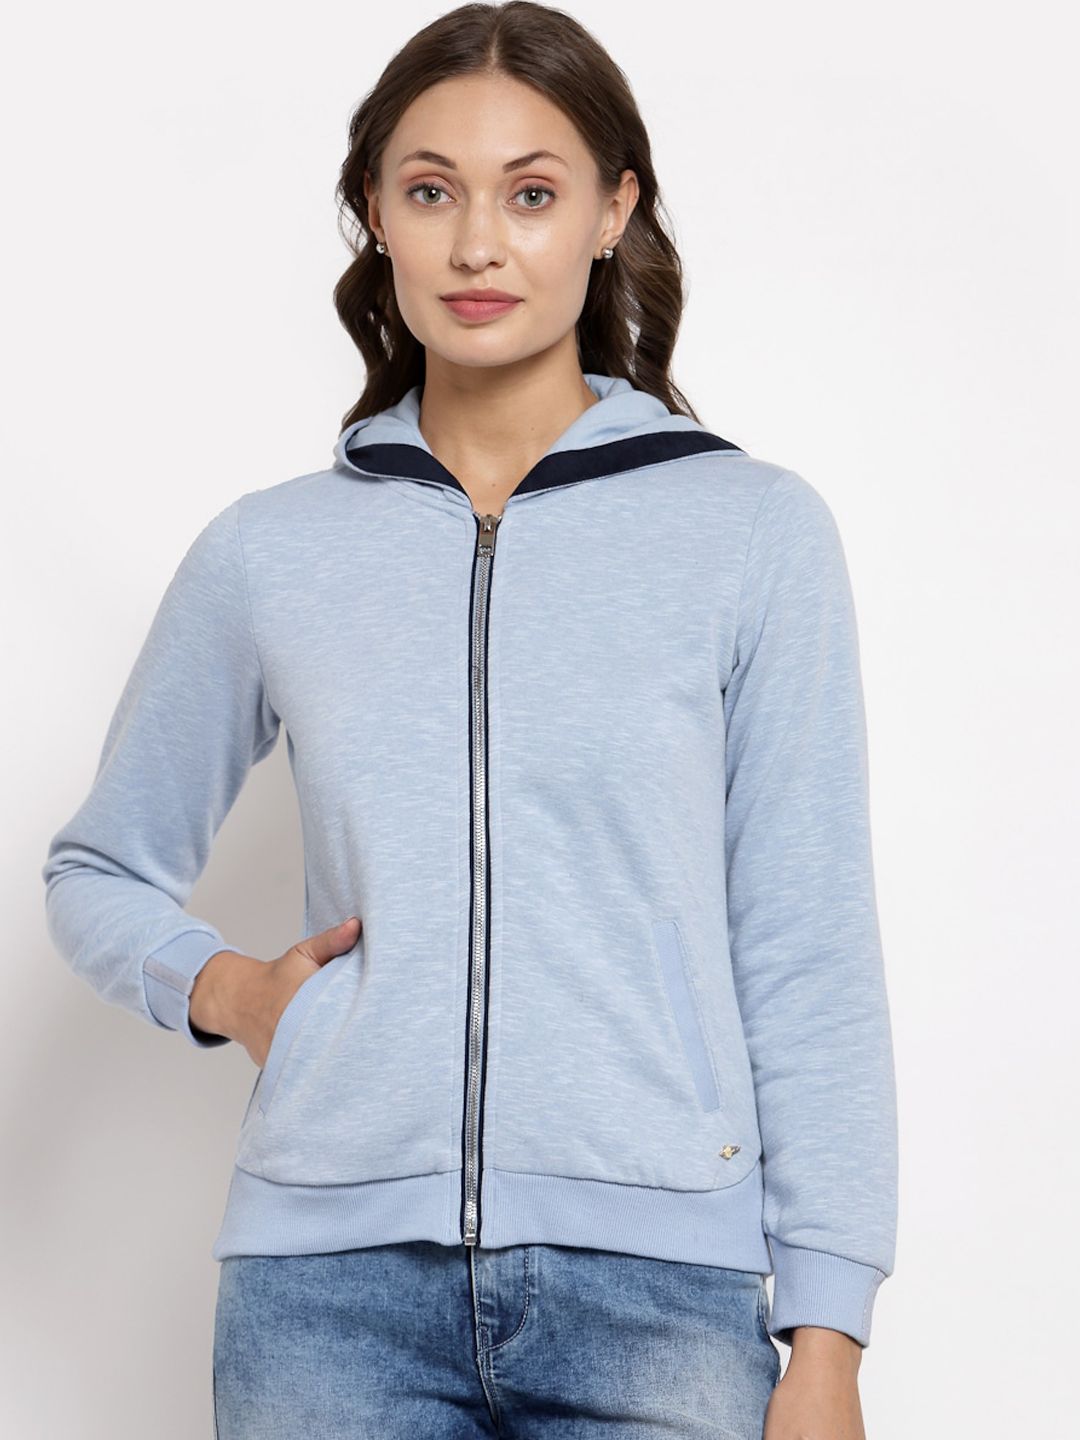 Juelle Women Blue Solid Hooded Sweatshirt Price in India